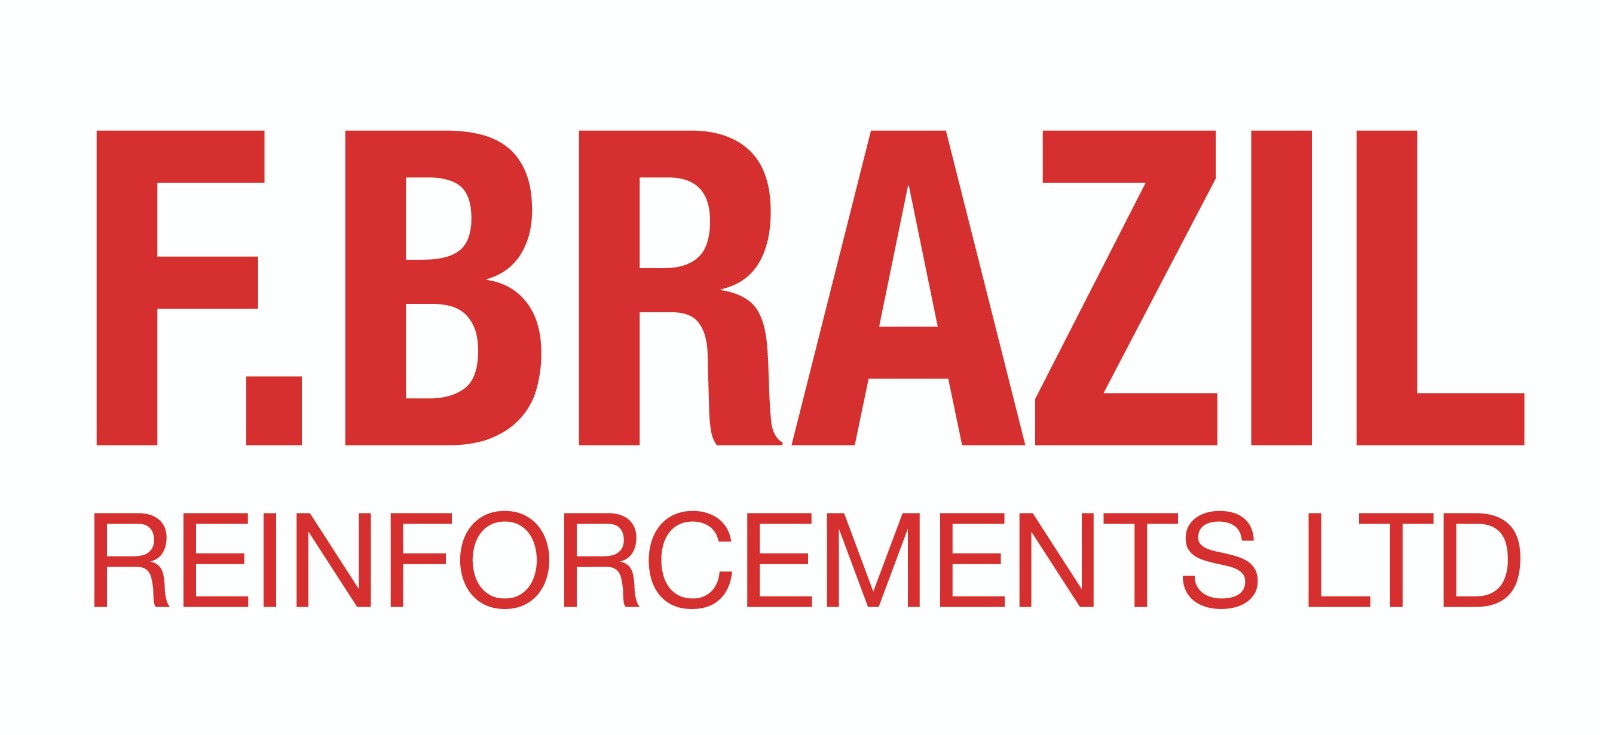 F Brazil Reinforcements Logo